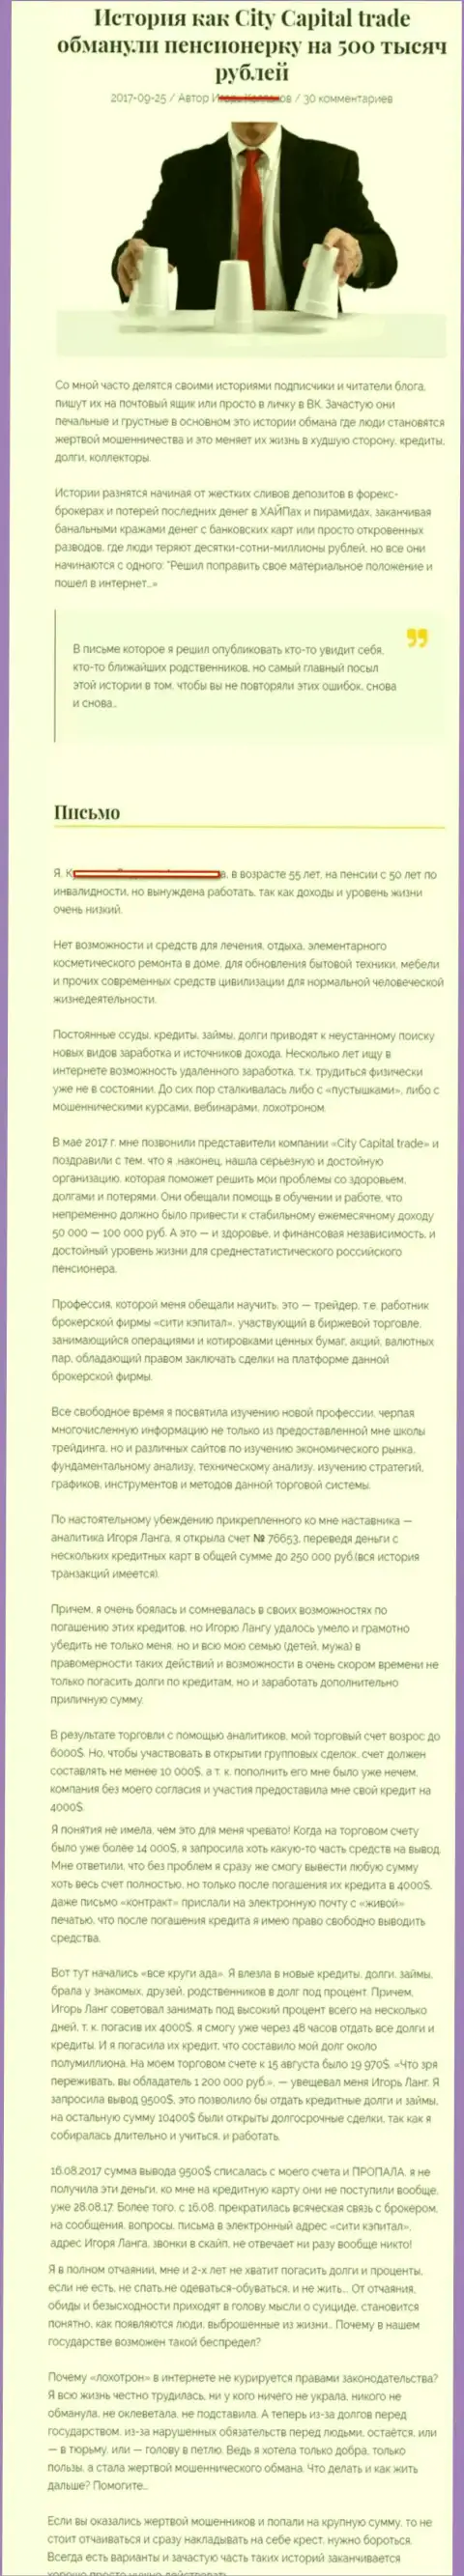 CITY CAPITAL обманули клиентку на пенсии - инвалида на общую сумму 500 тыс. рублей - МОШЕННИКИ !!!